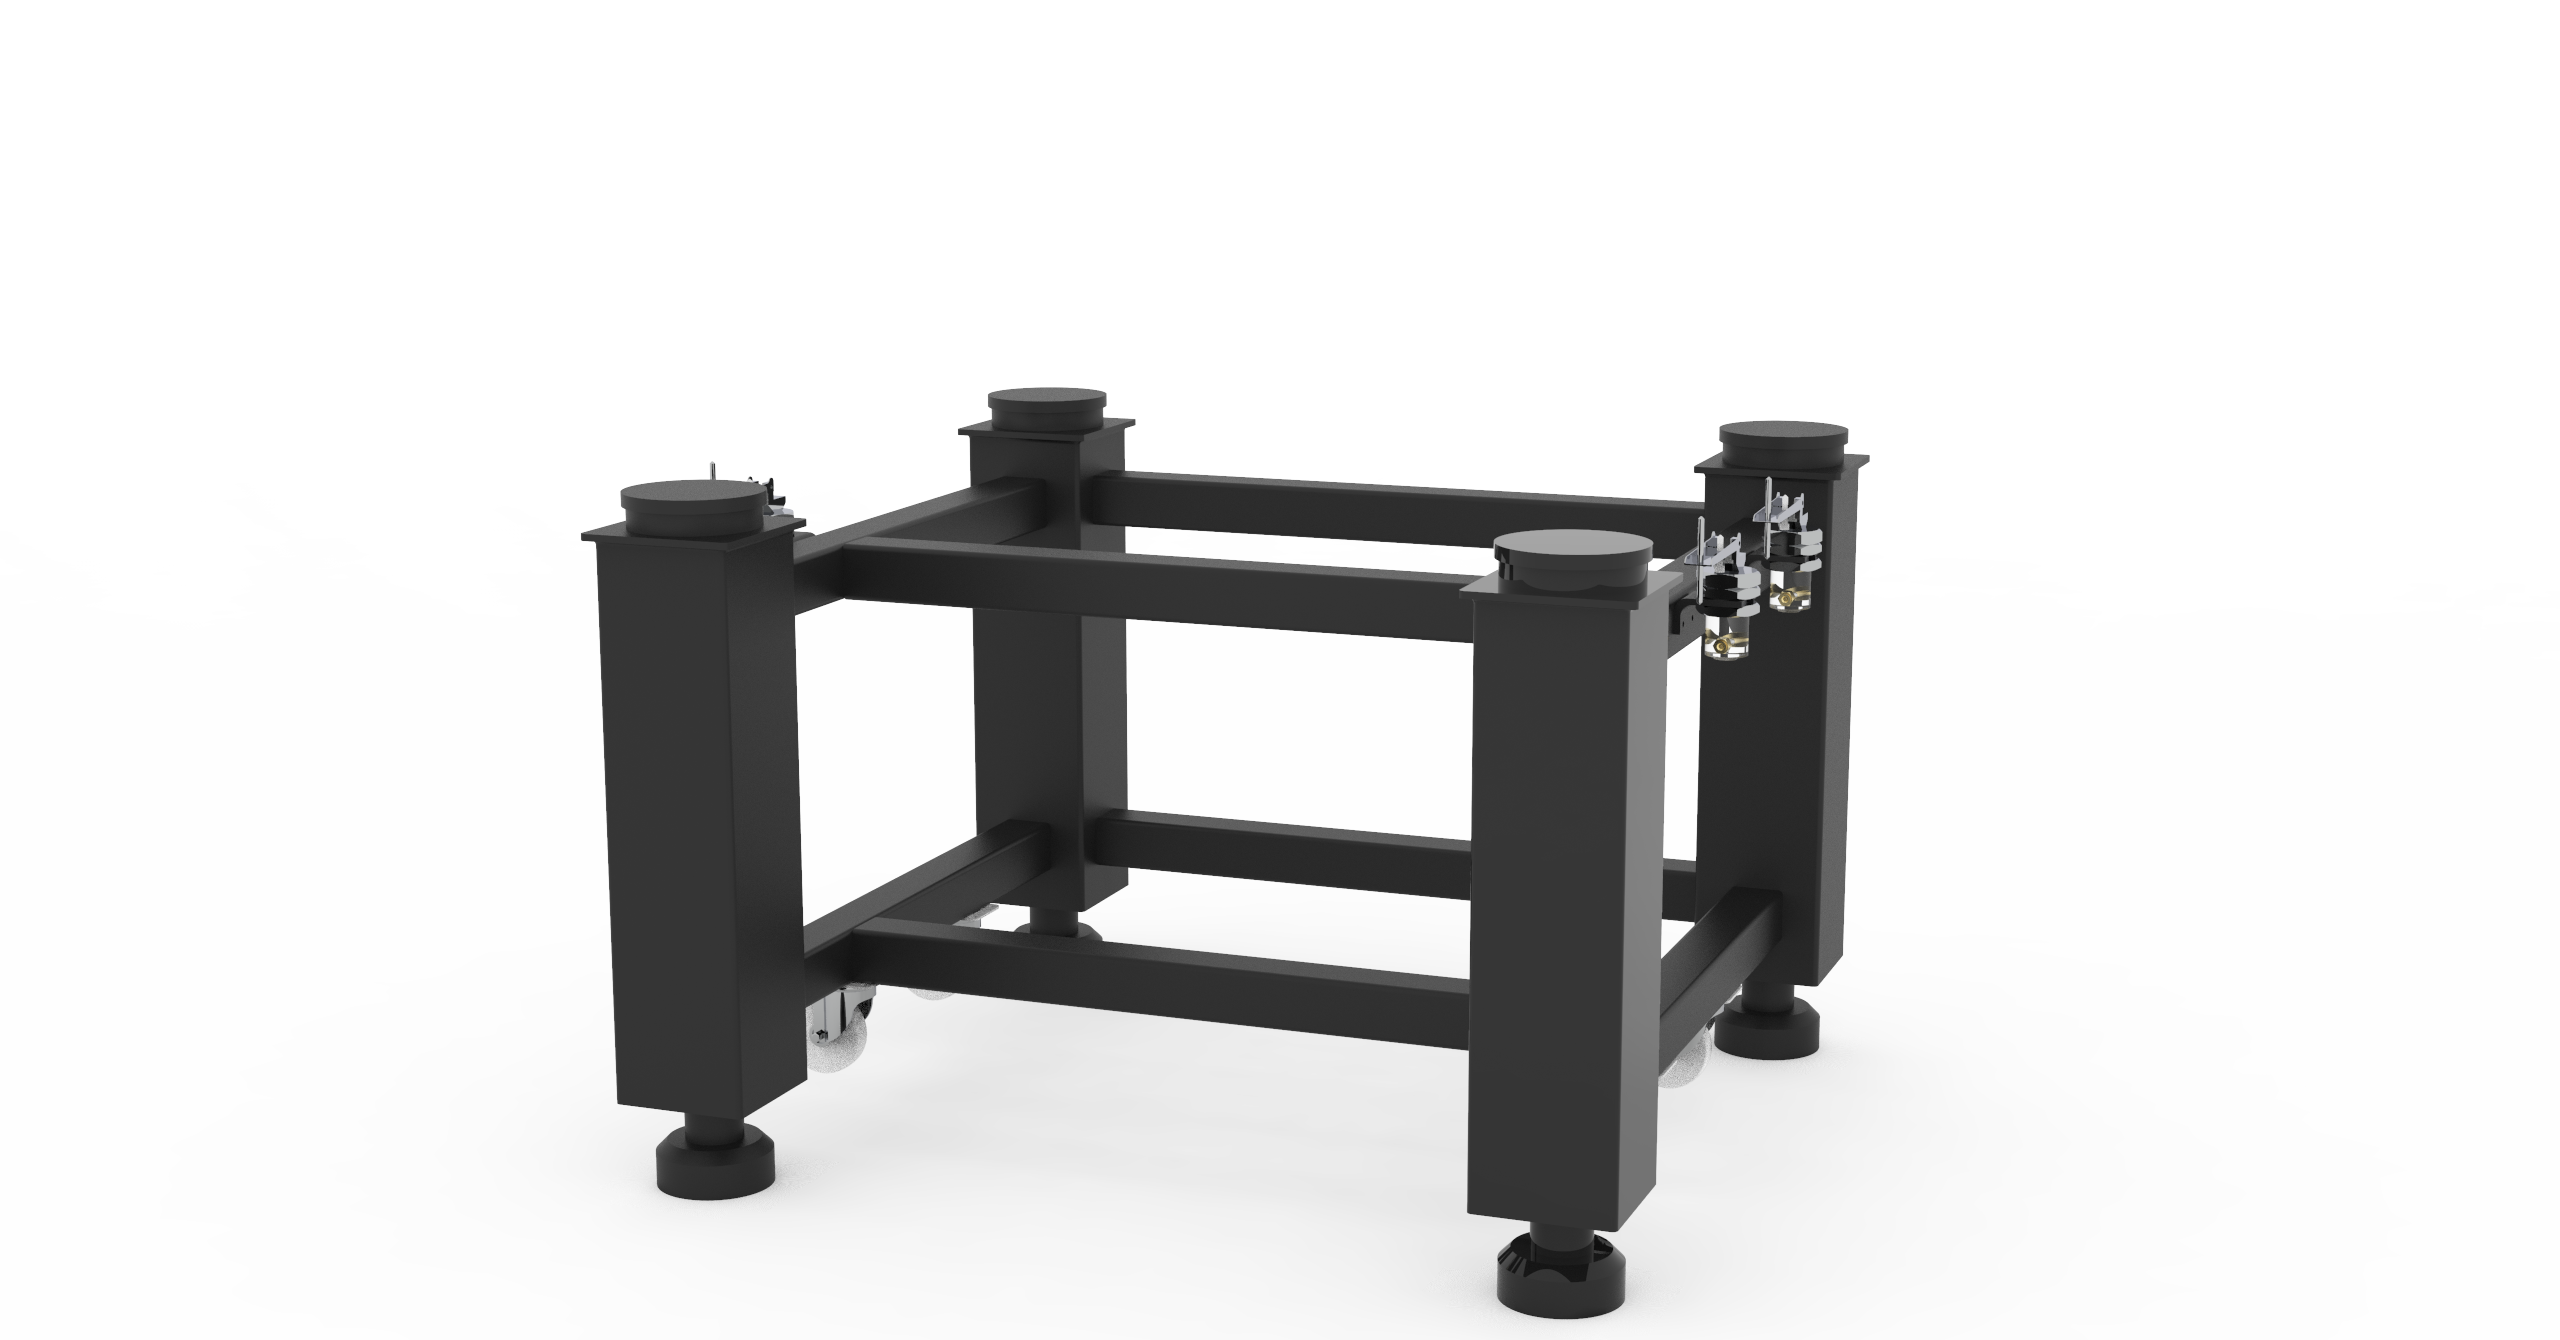 Air-floating automatic balance anti-vibration table